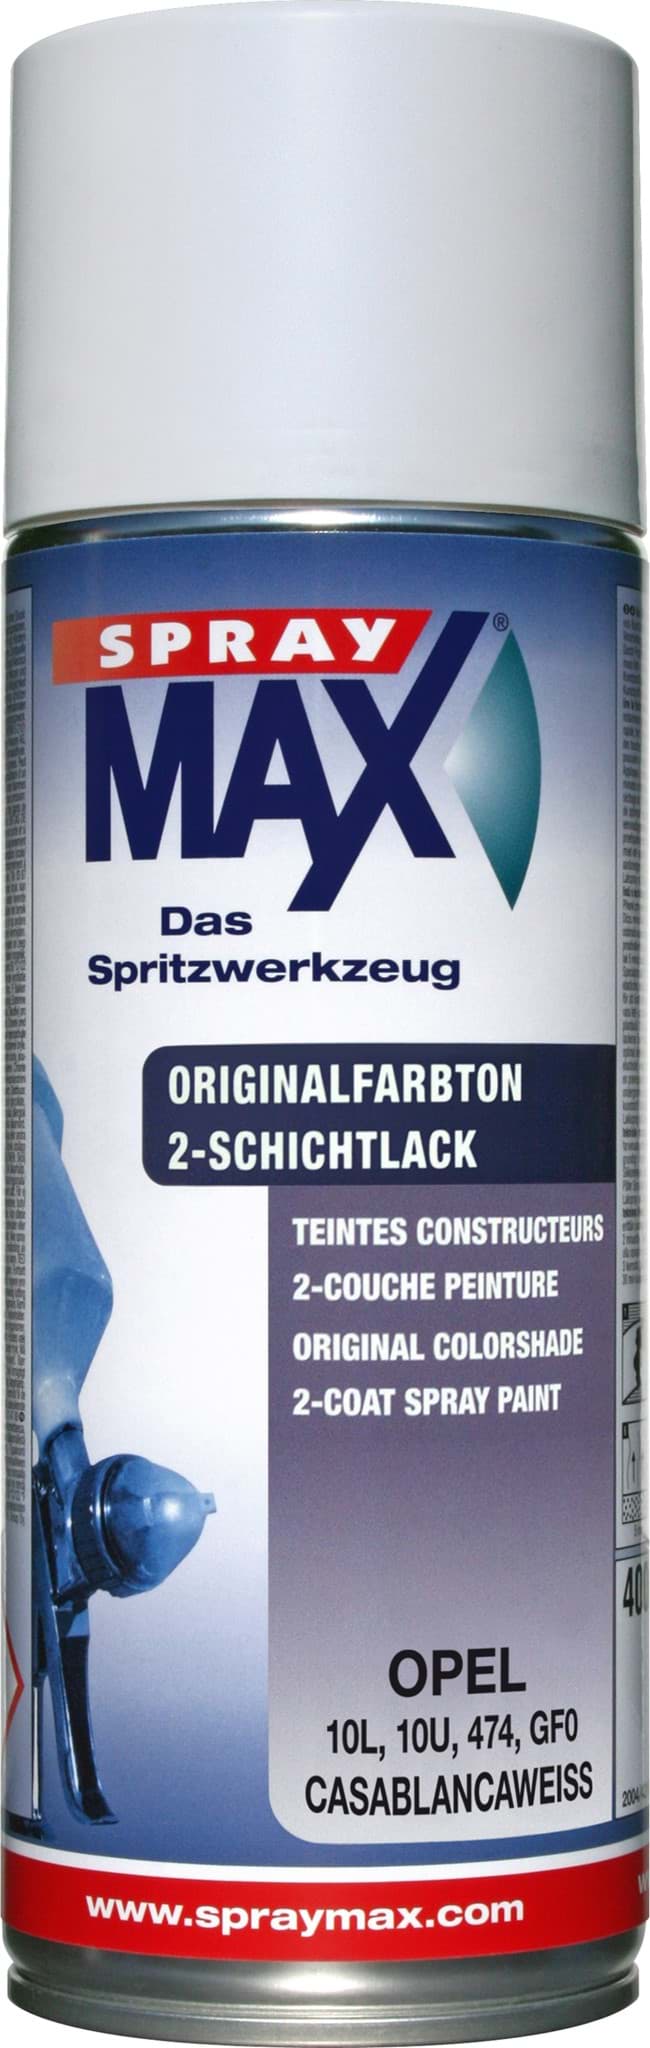 SprayMax Originalfarbton für Opel 474 casablancaweiss resmi